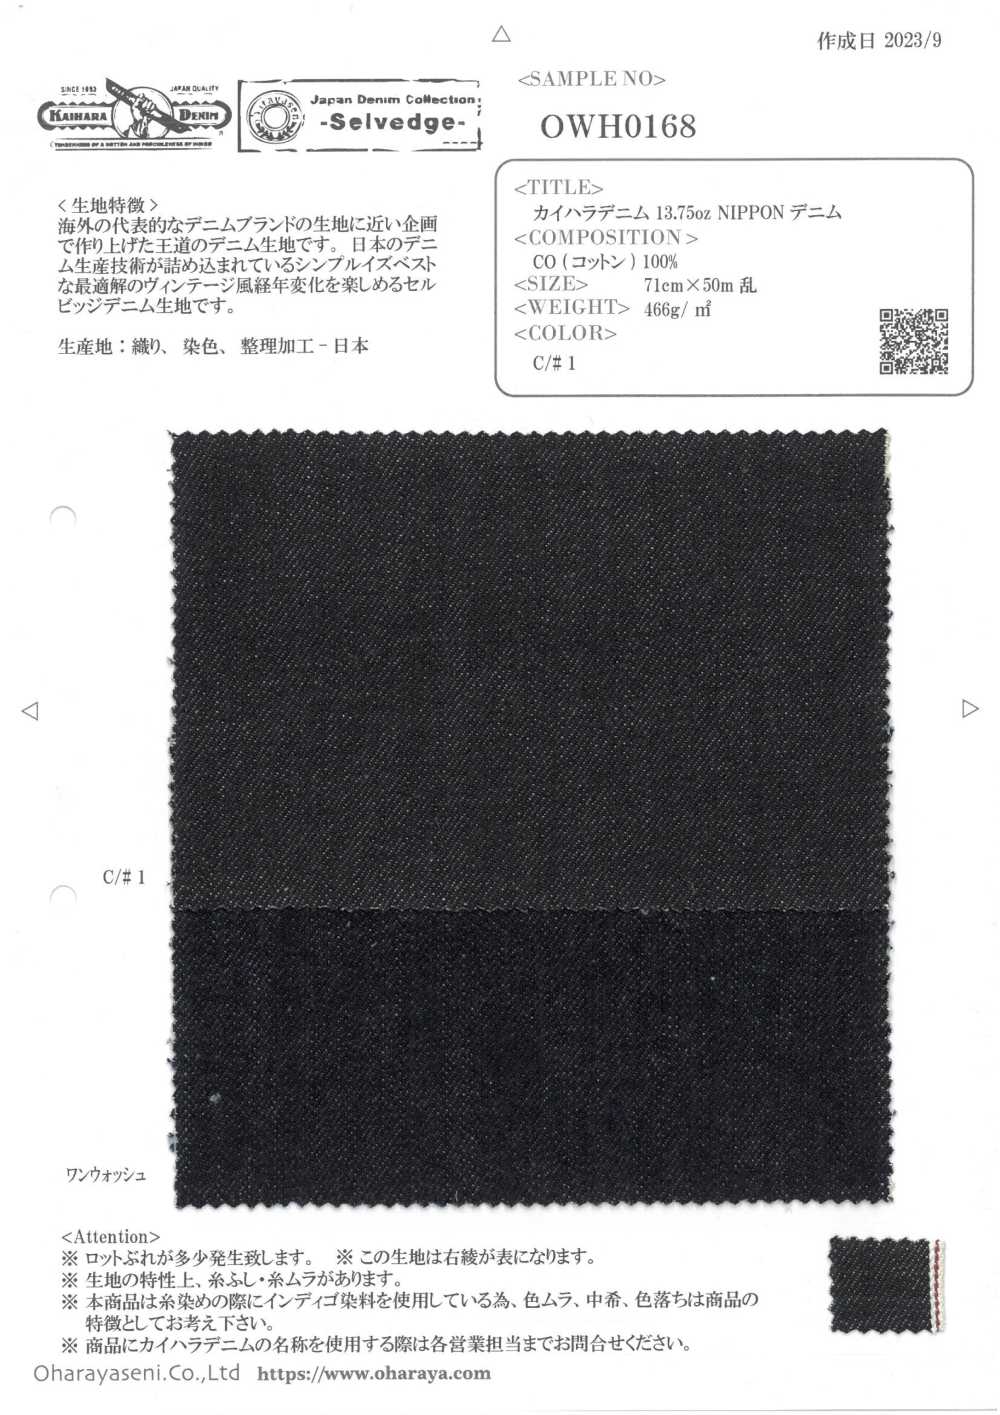 OWH0168 Kaihara Denim 13,75 Oz NIPPON Denim[Fabrication De Textile] Oharayaseni